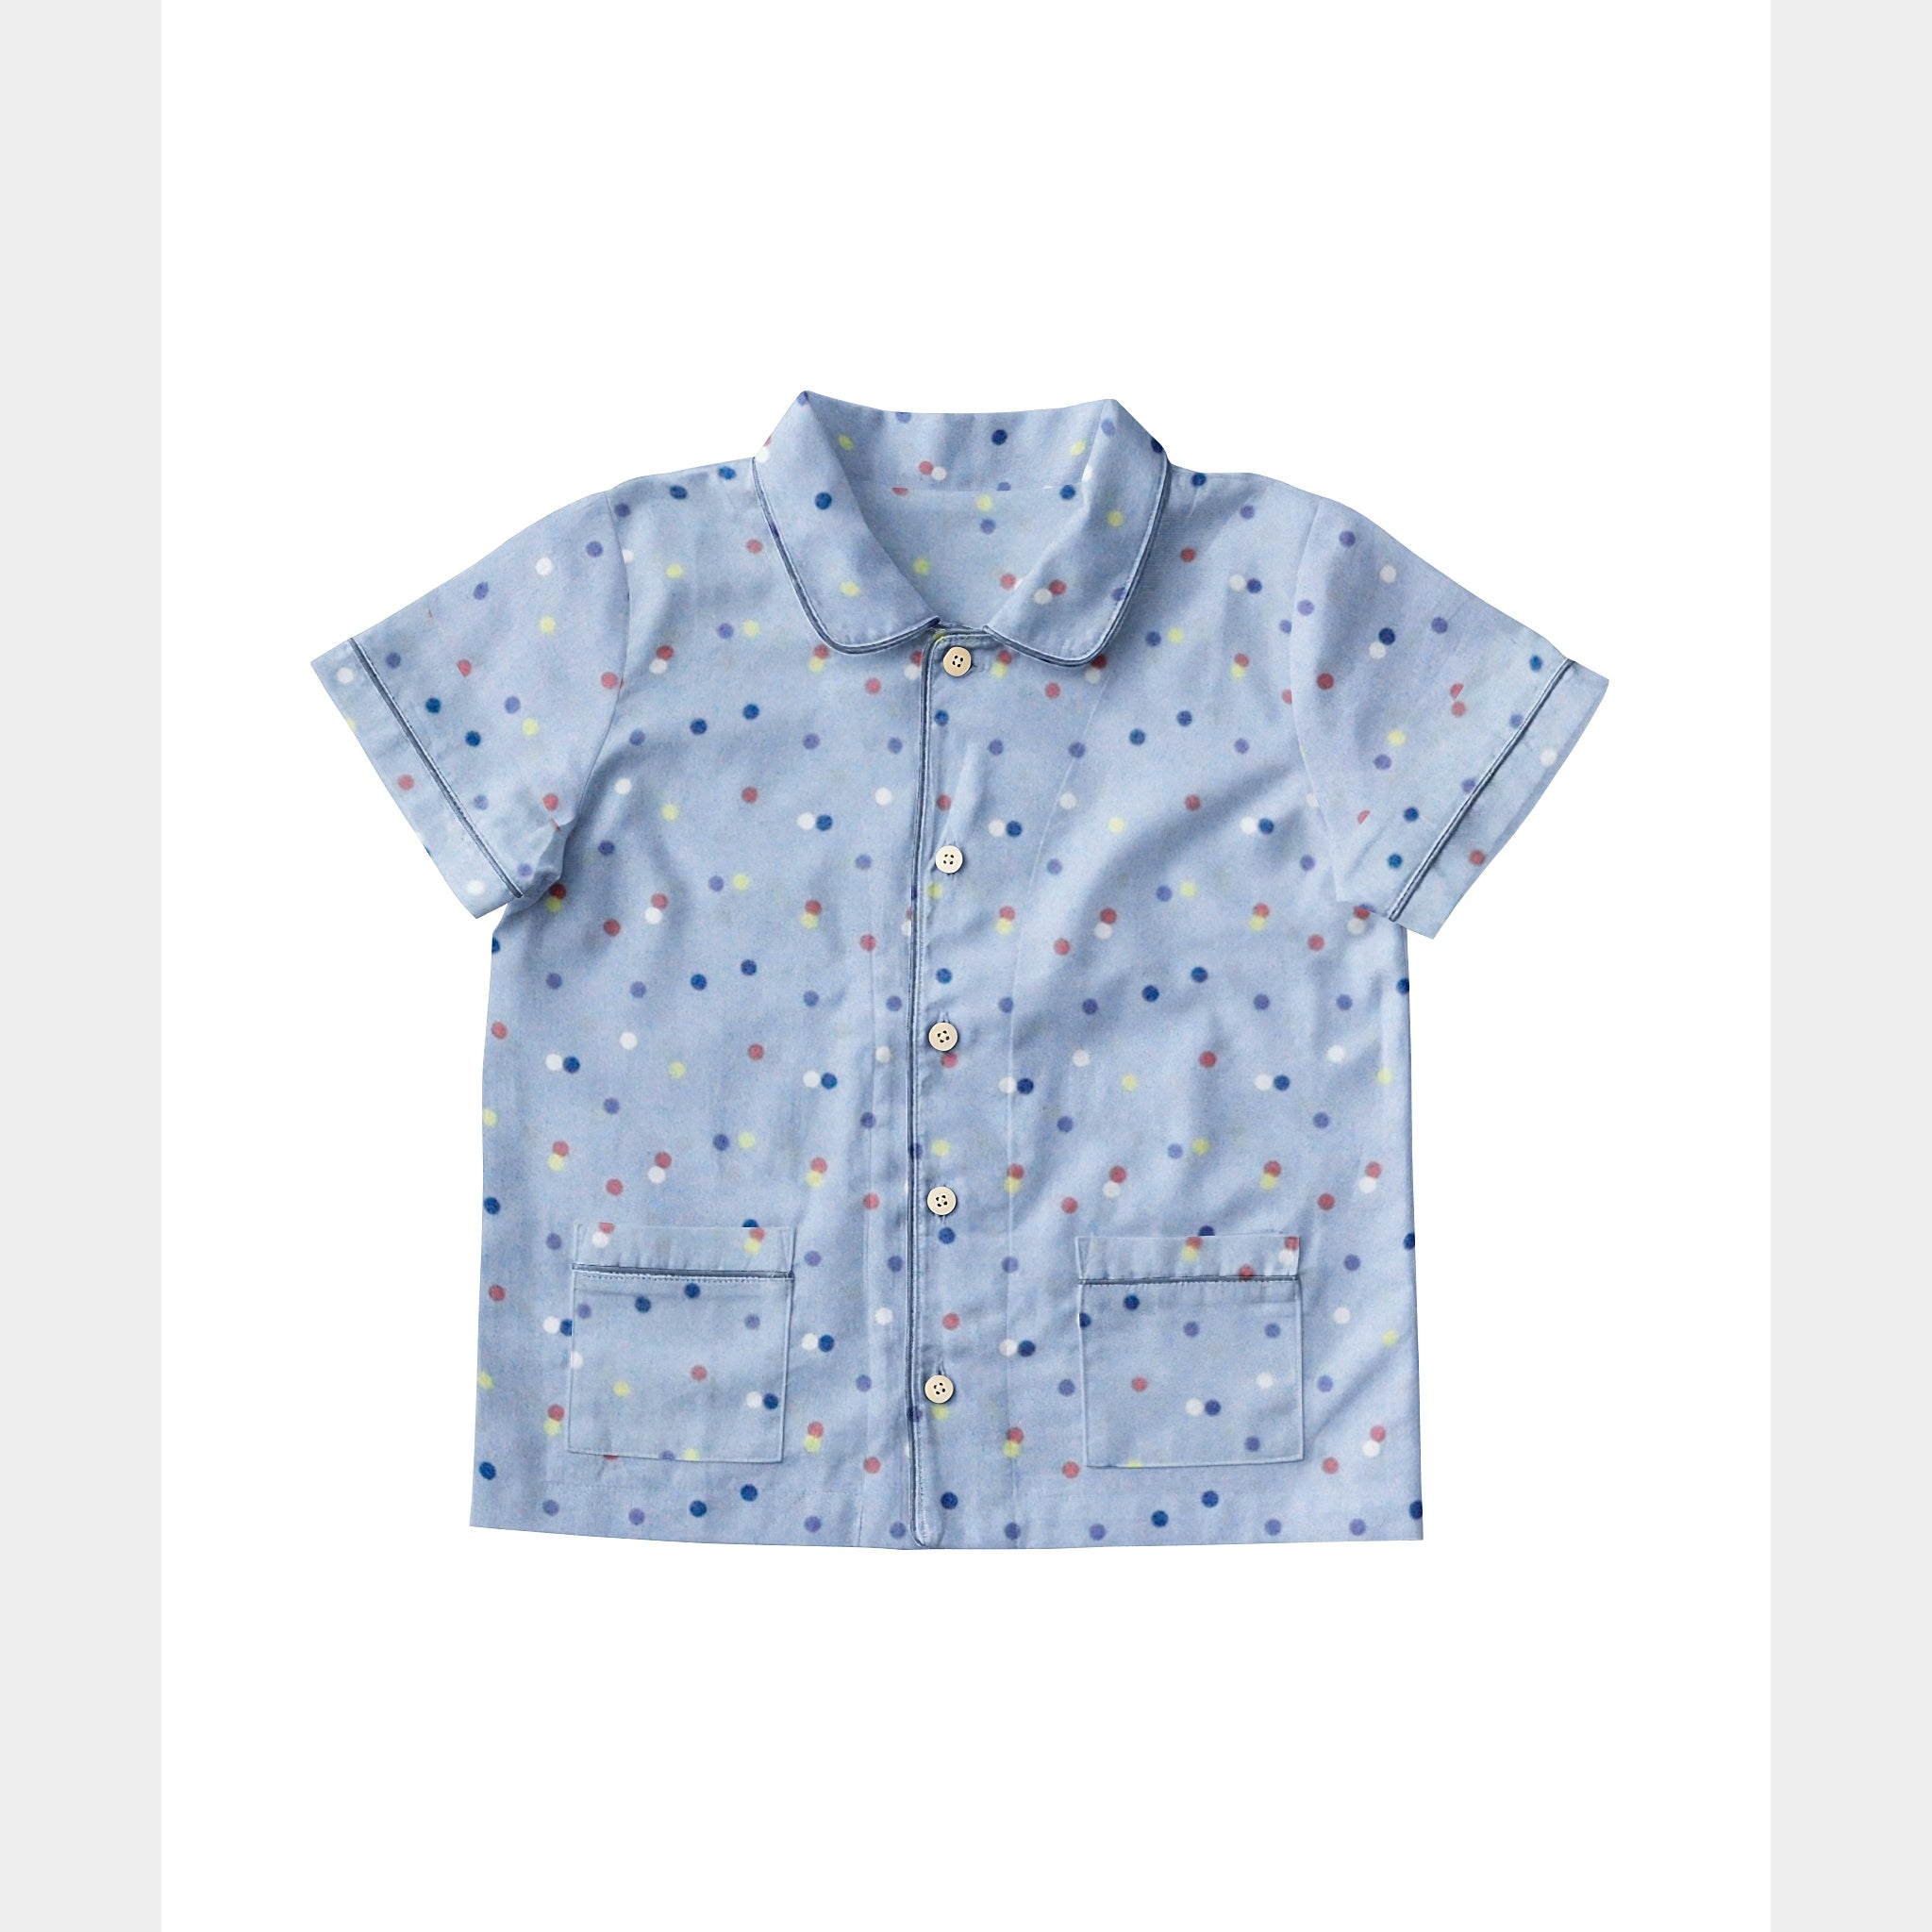 'Blue Dots' Organic Collared Pajama Set